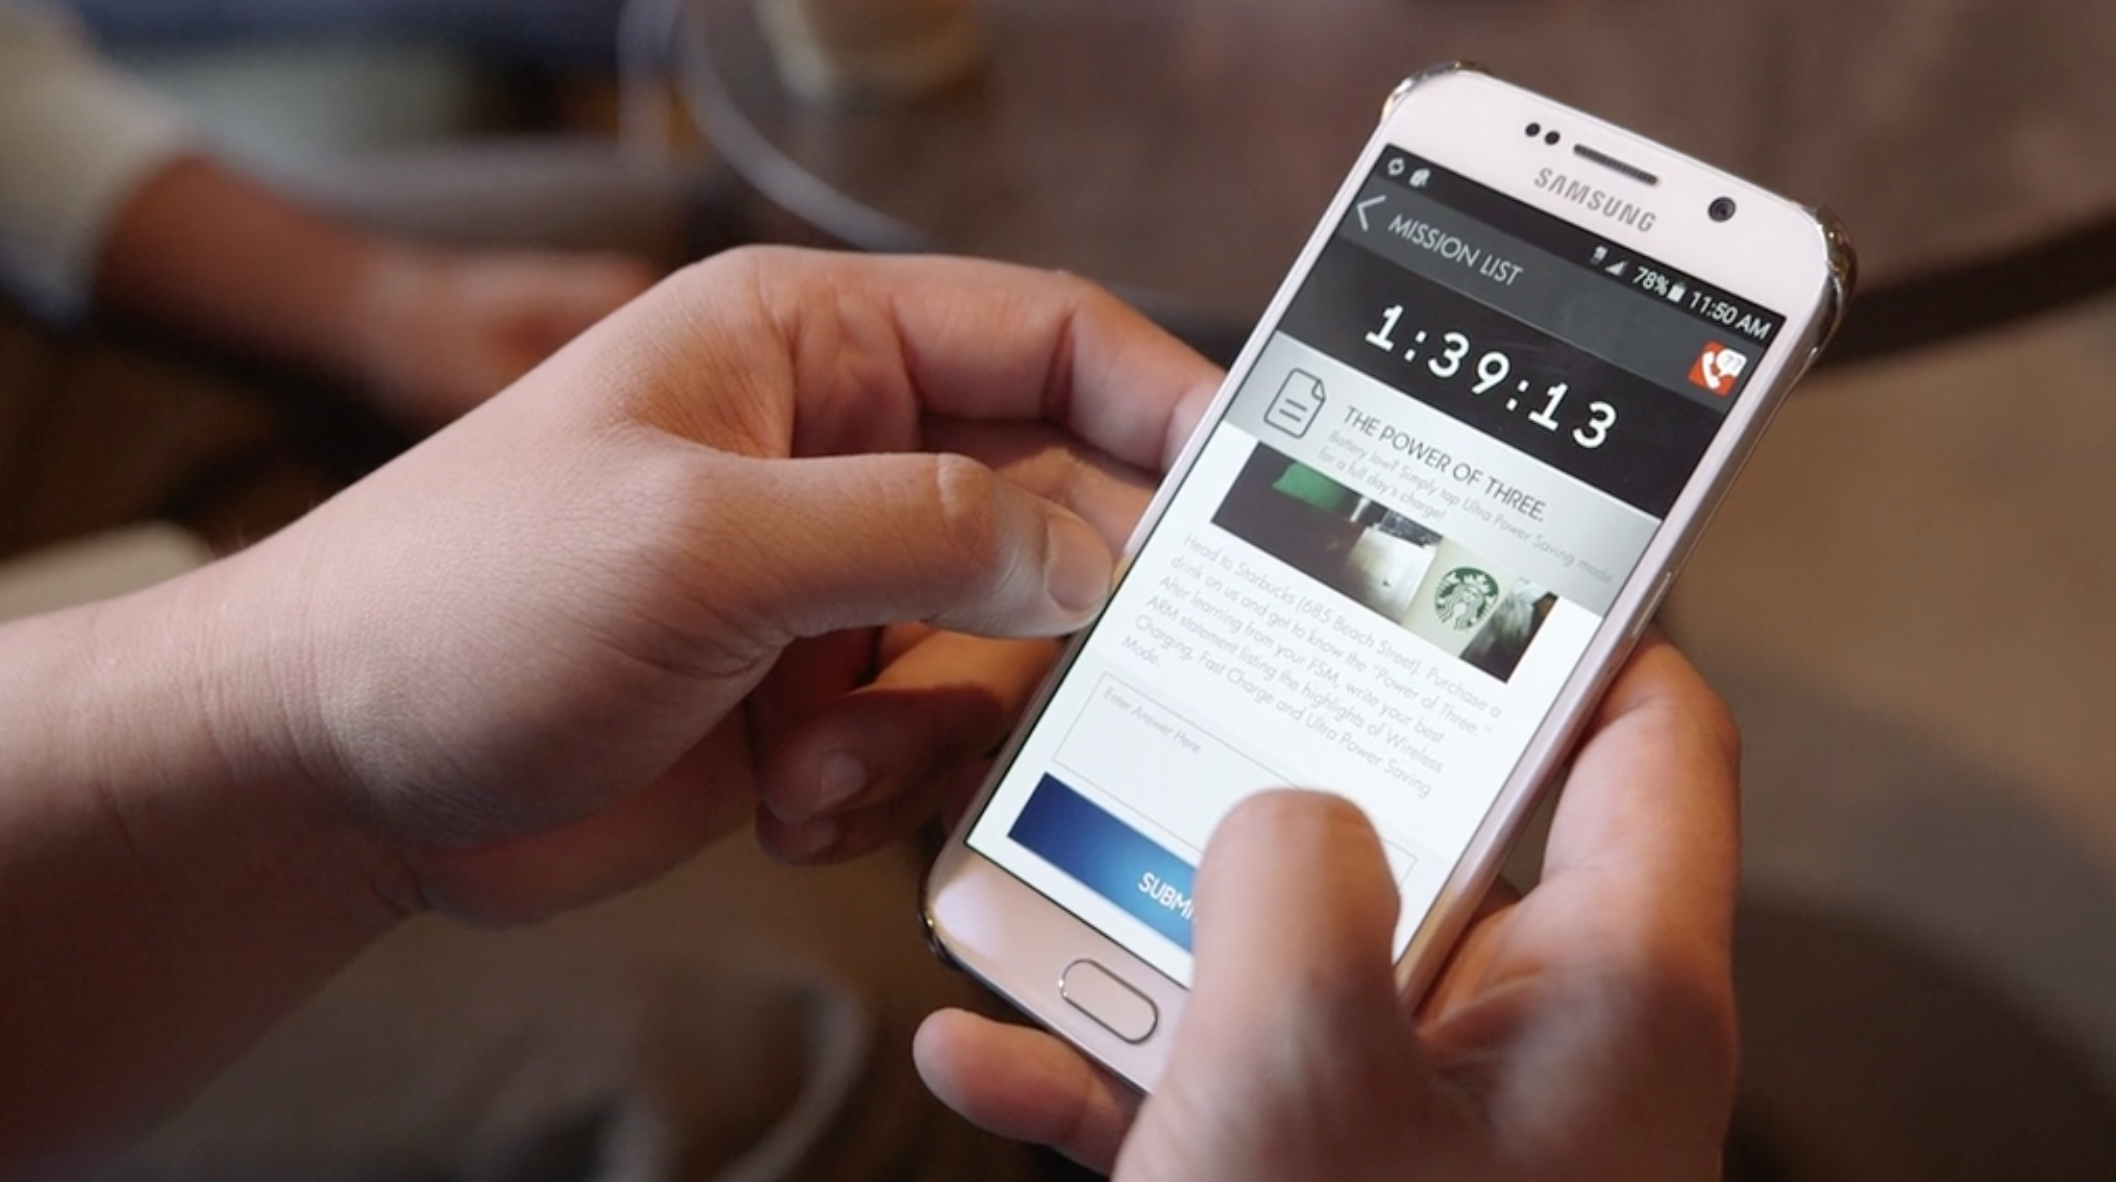 Samsung Galaxy S6 Mobile Training App